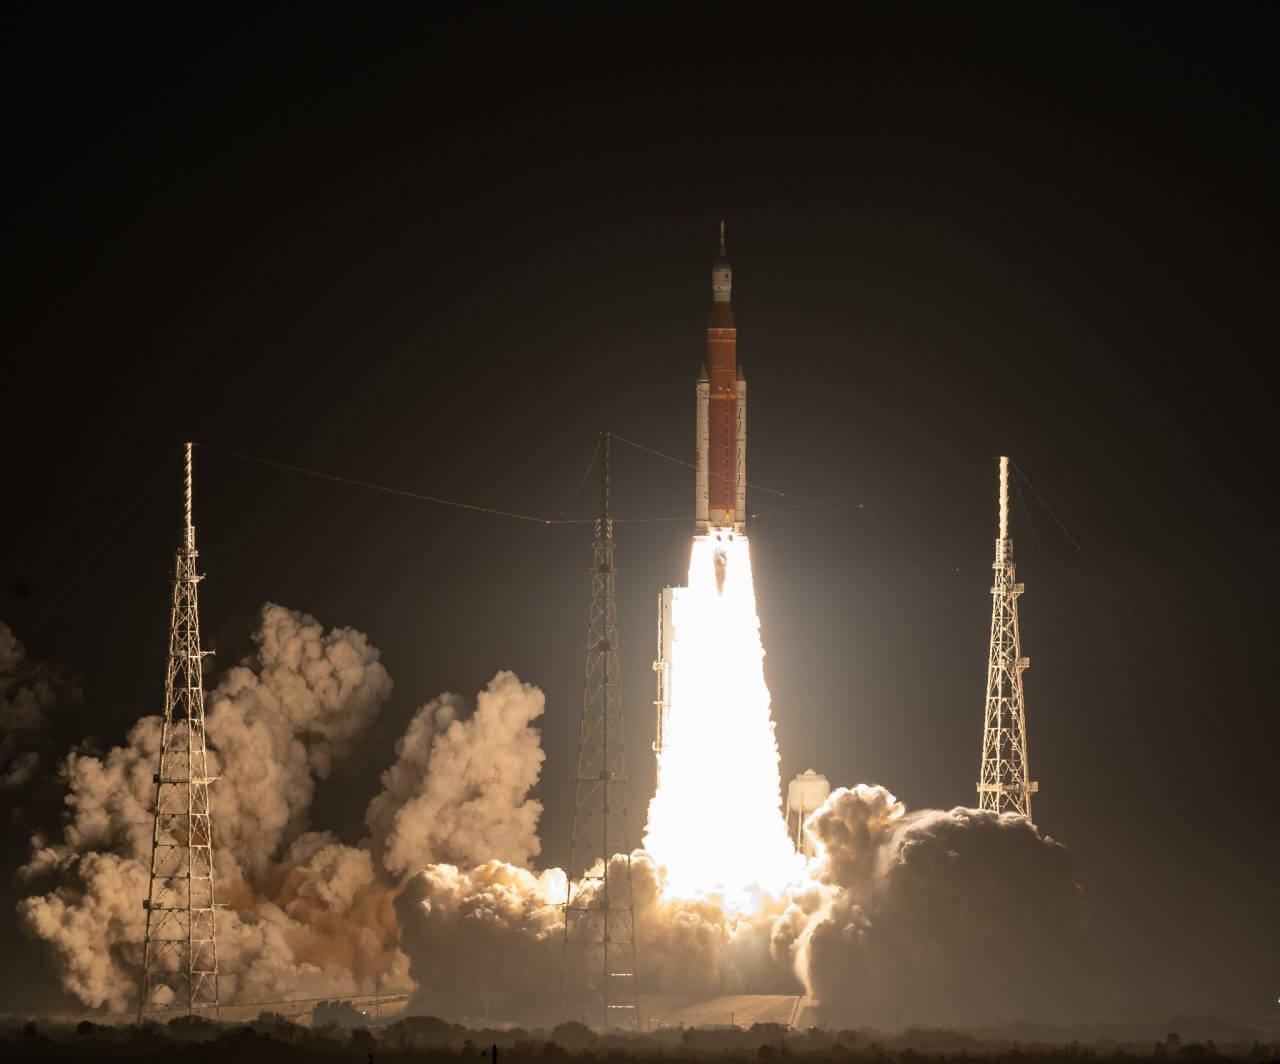 Artemis1-SLS-launch-NASA-52503608660_f0234a19ae_k.jpg